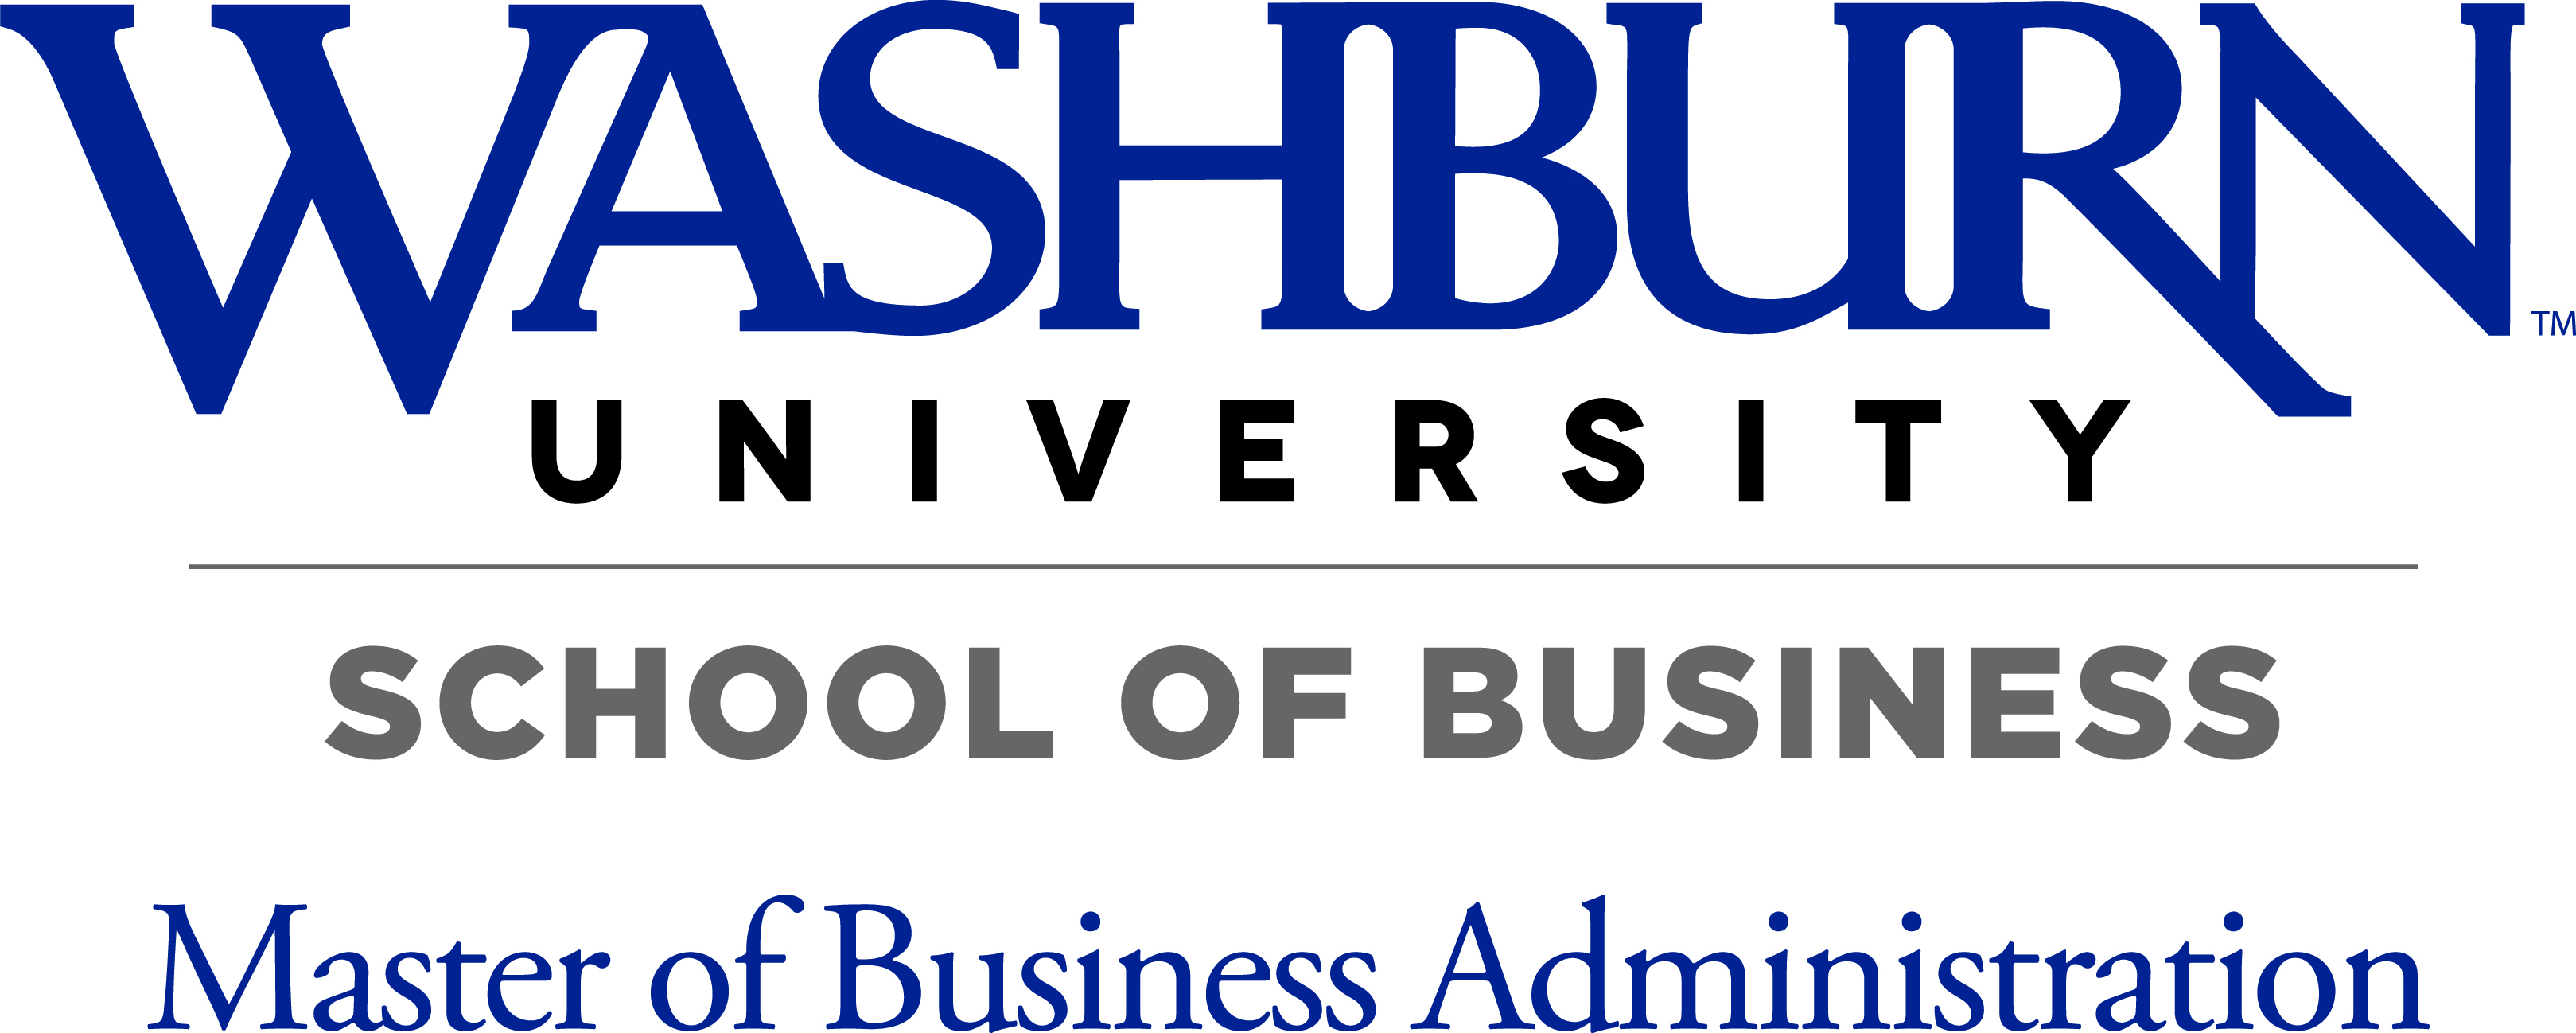 Washburn University School of Business